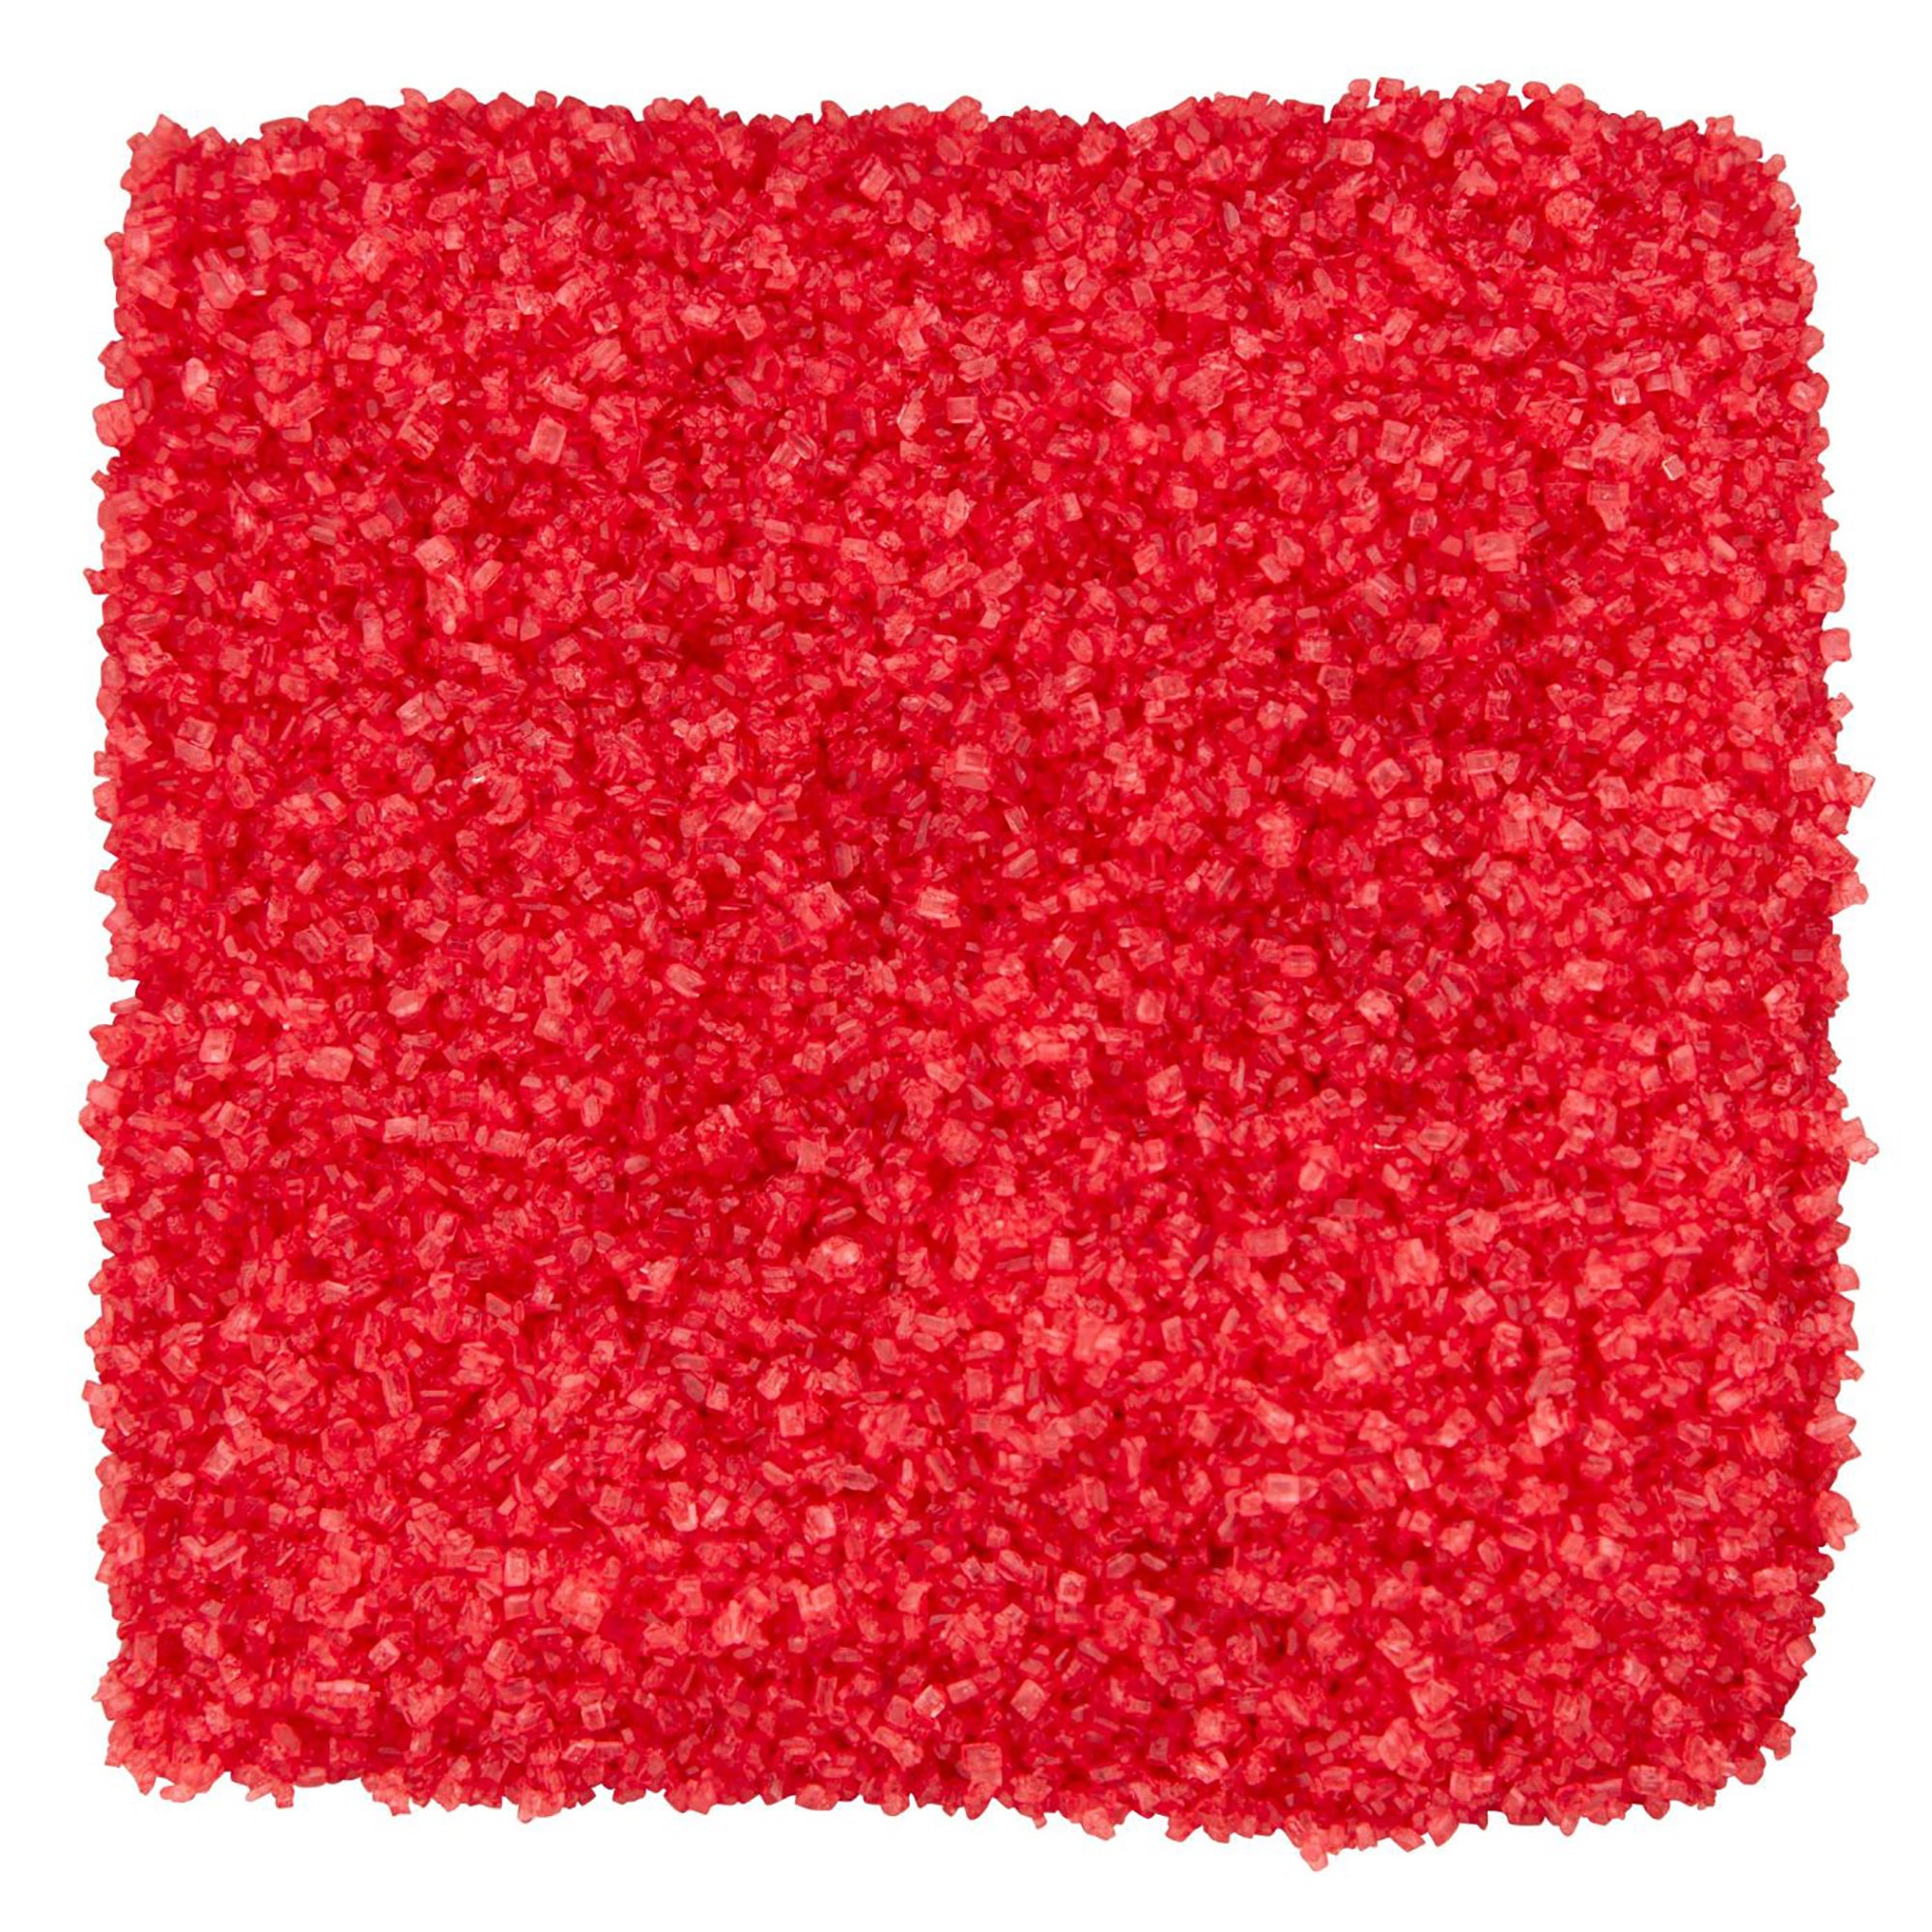 Wilton Sprinkles Red Sanding Sugar 3.25oz (92g)